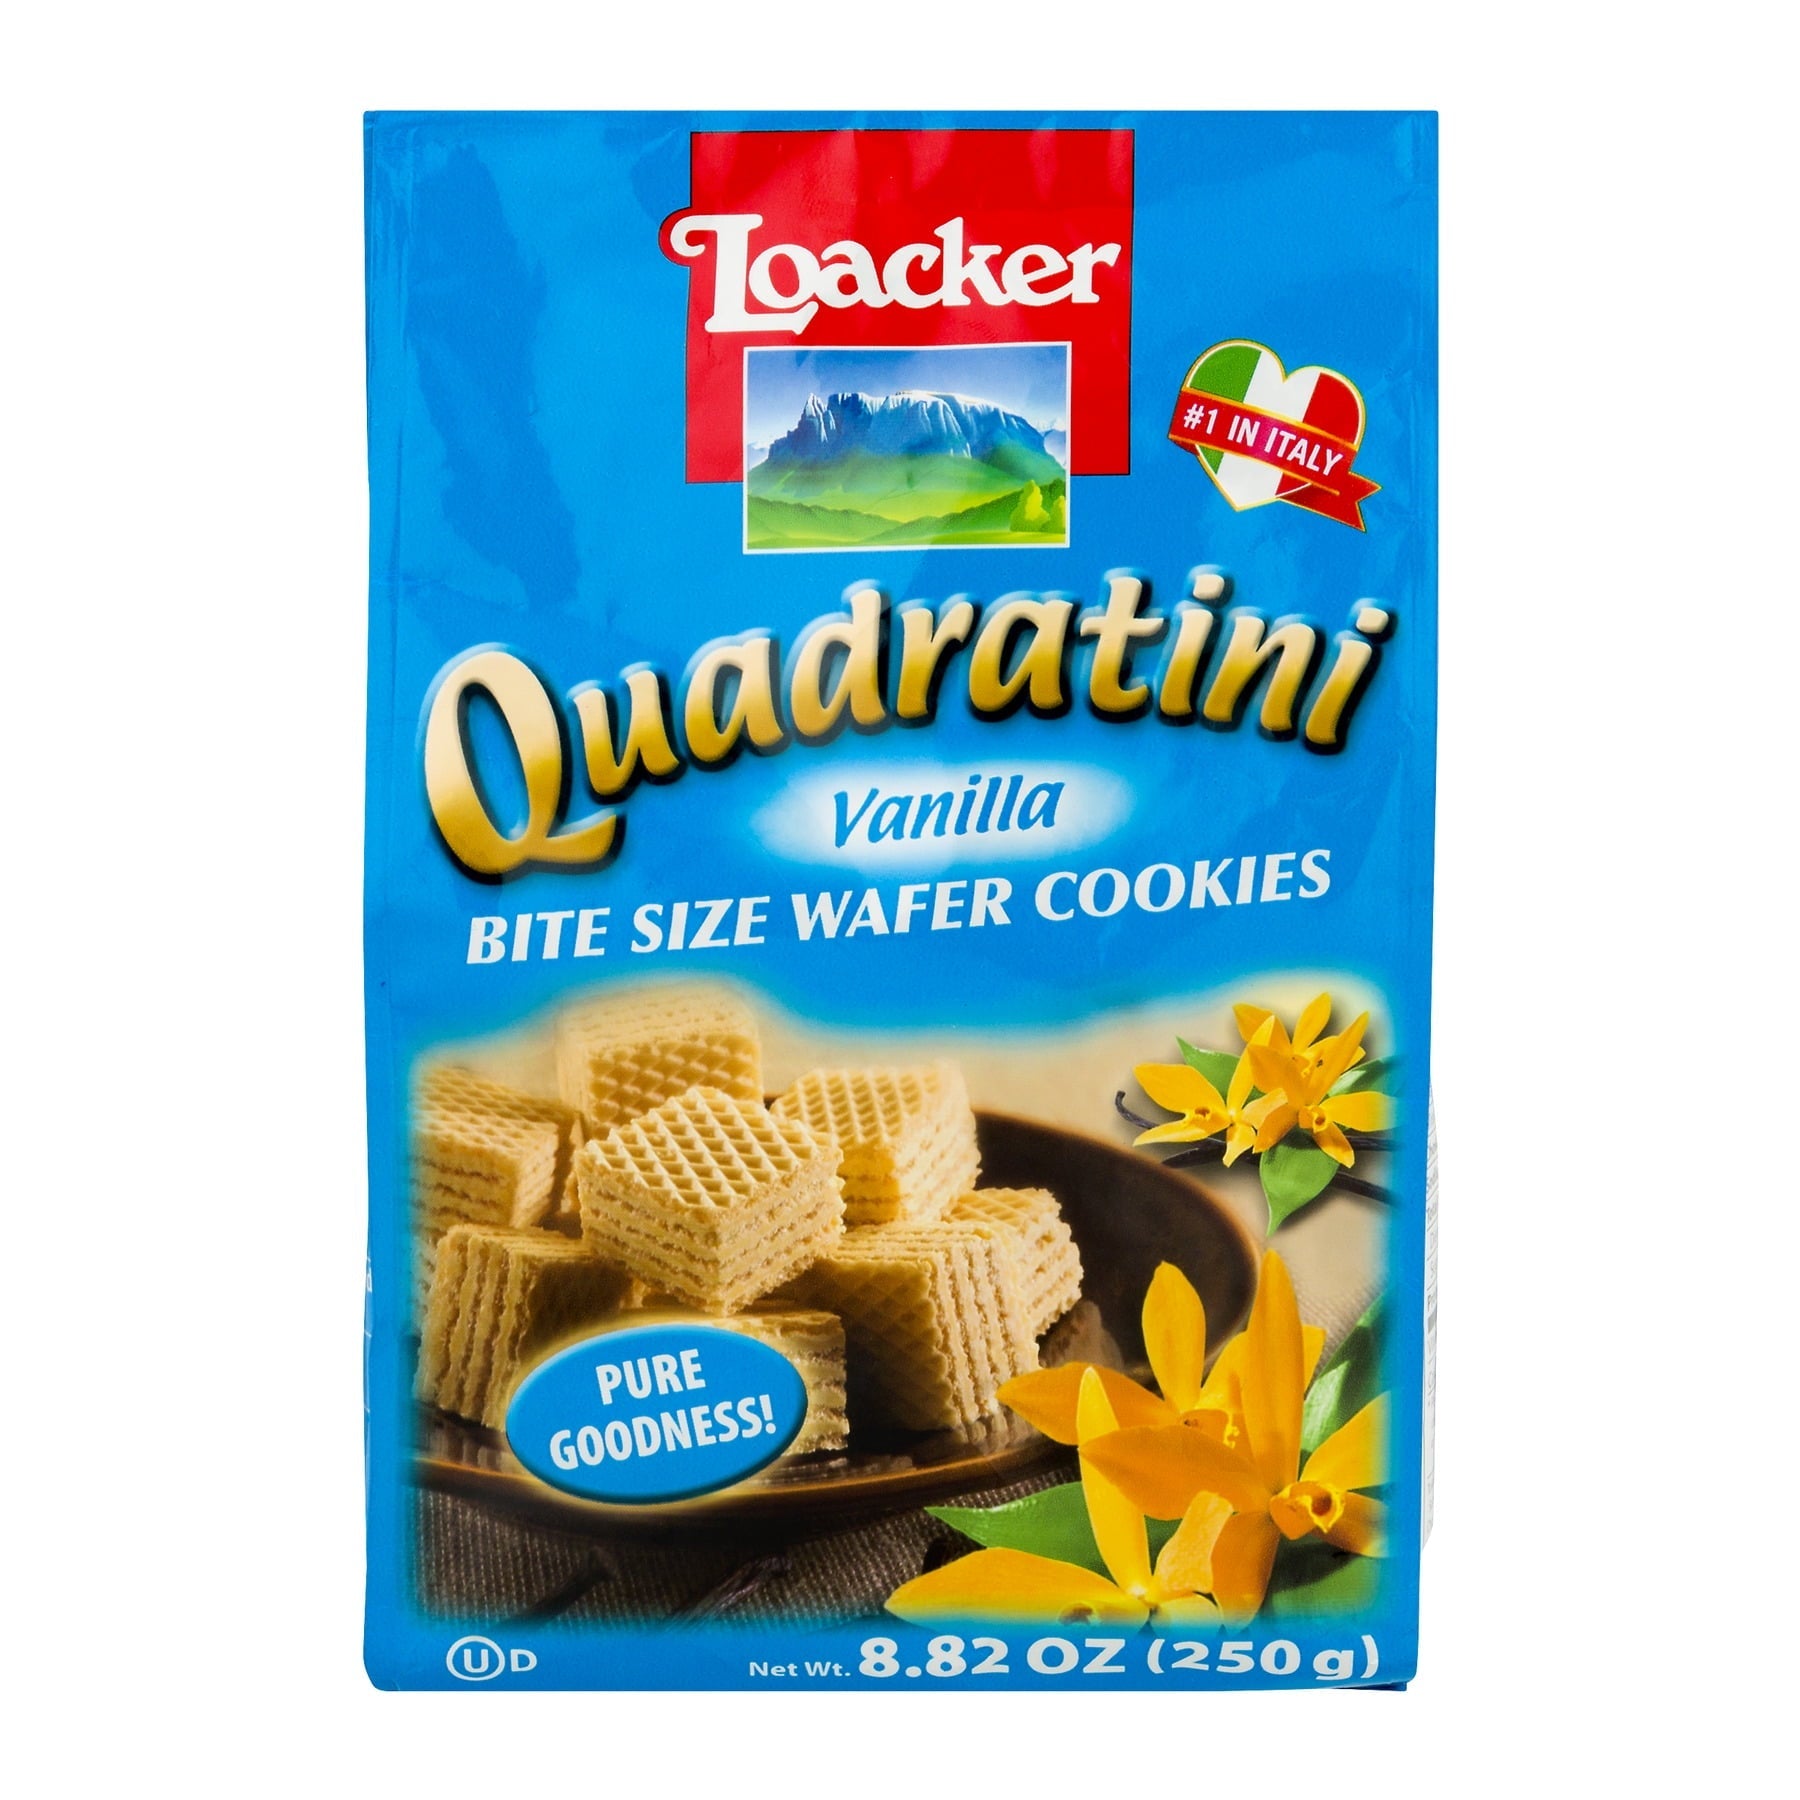 Loacker Quadratini Bite Size Wafer Cookies 8.82 Oz